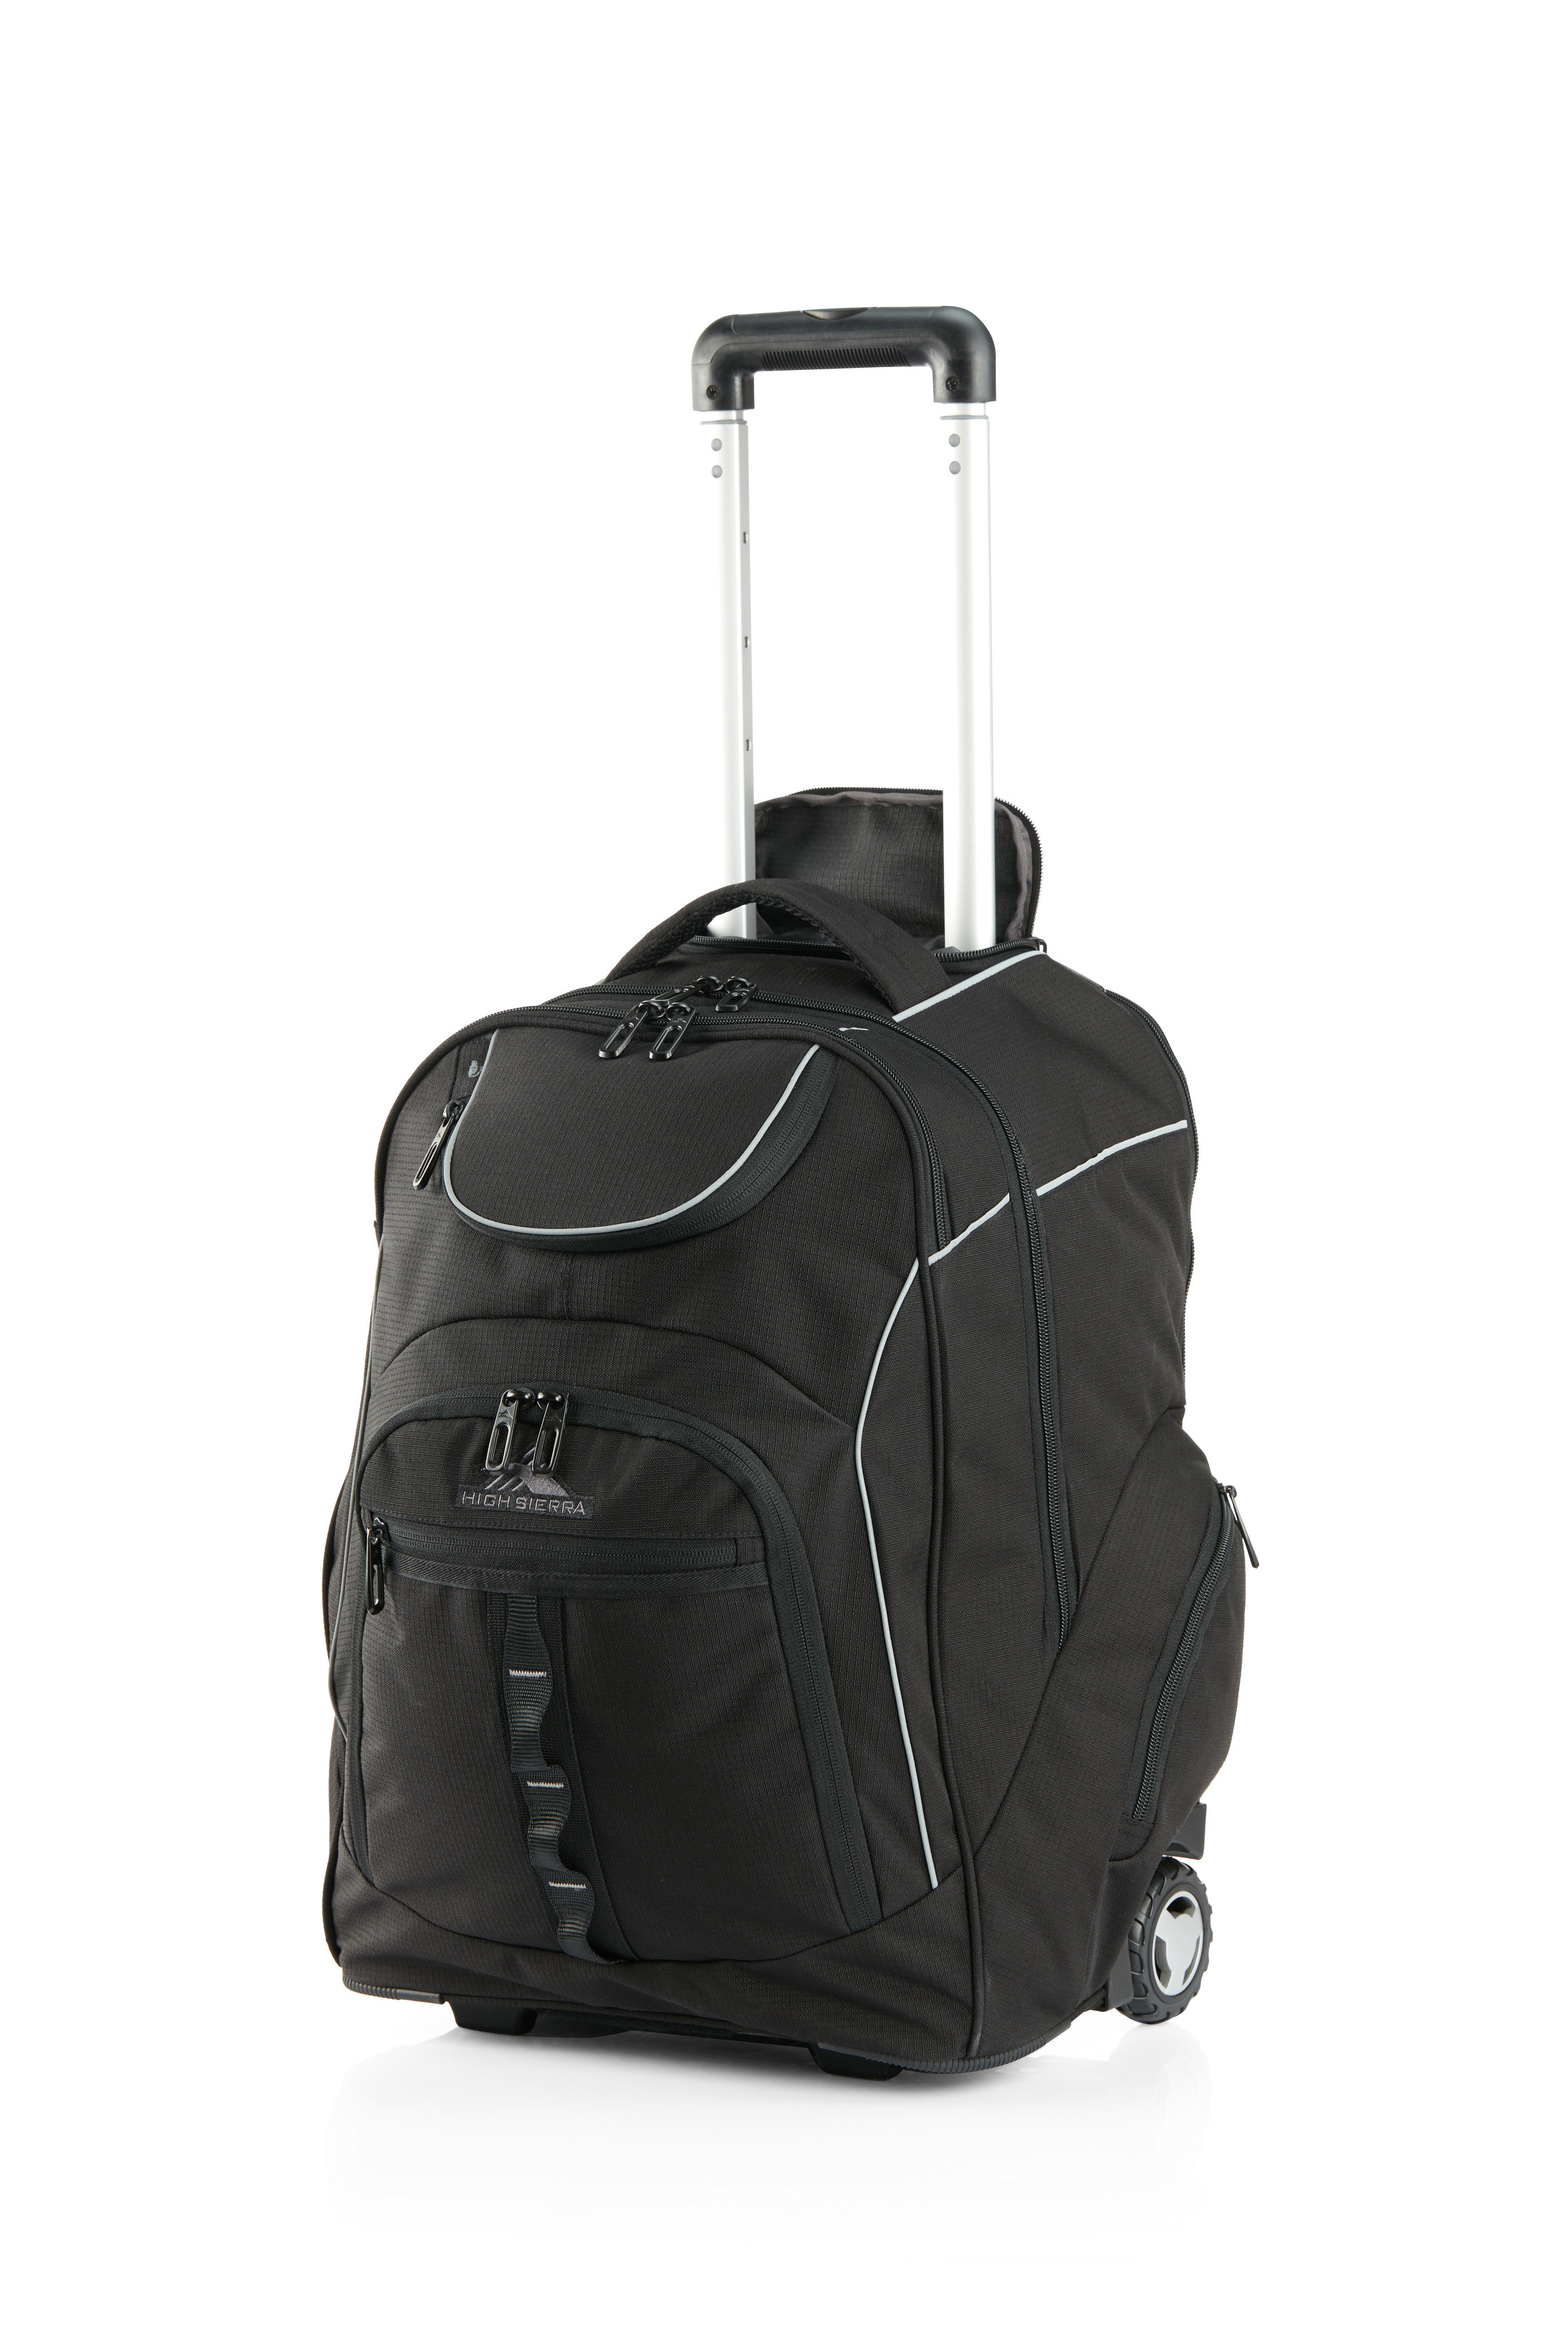 High Sierra - Access 3.0 Eco Pro Wheeled backpack - Black-2